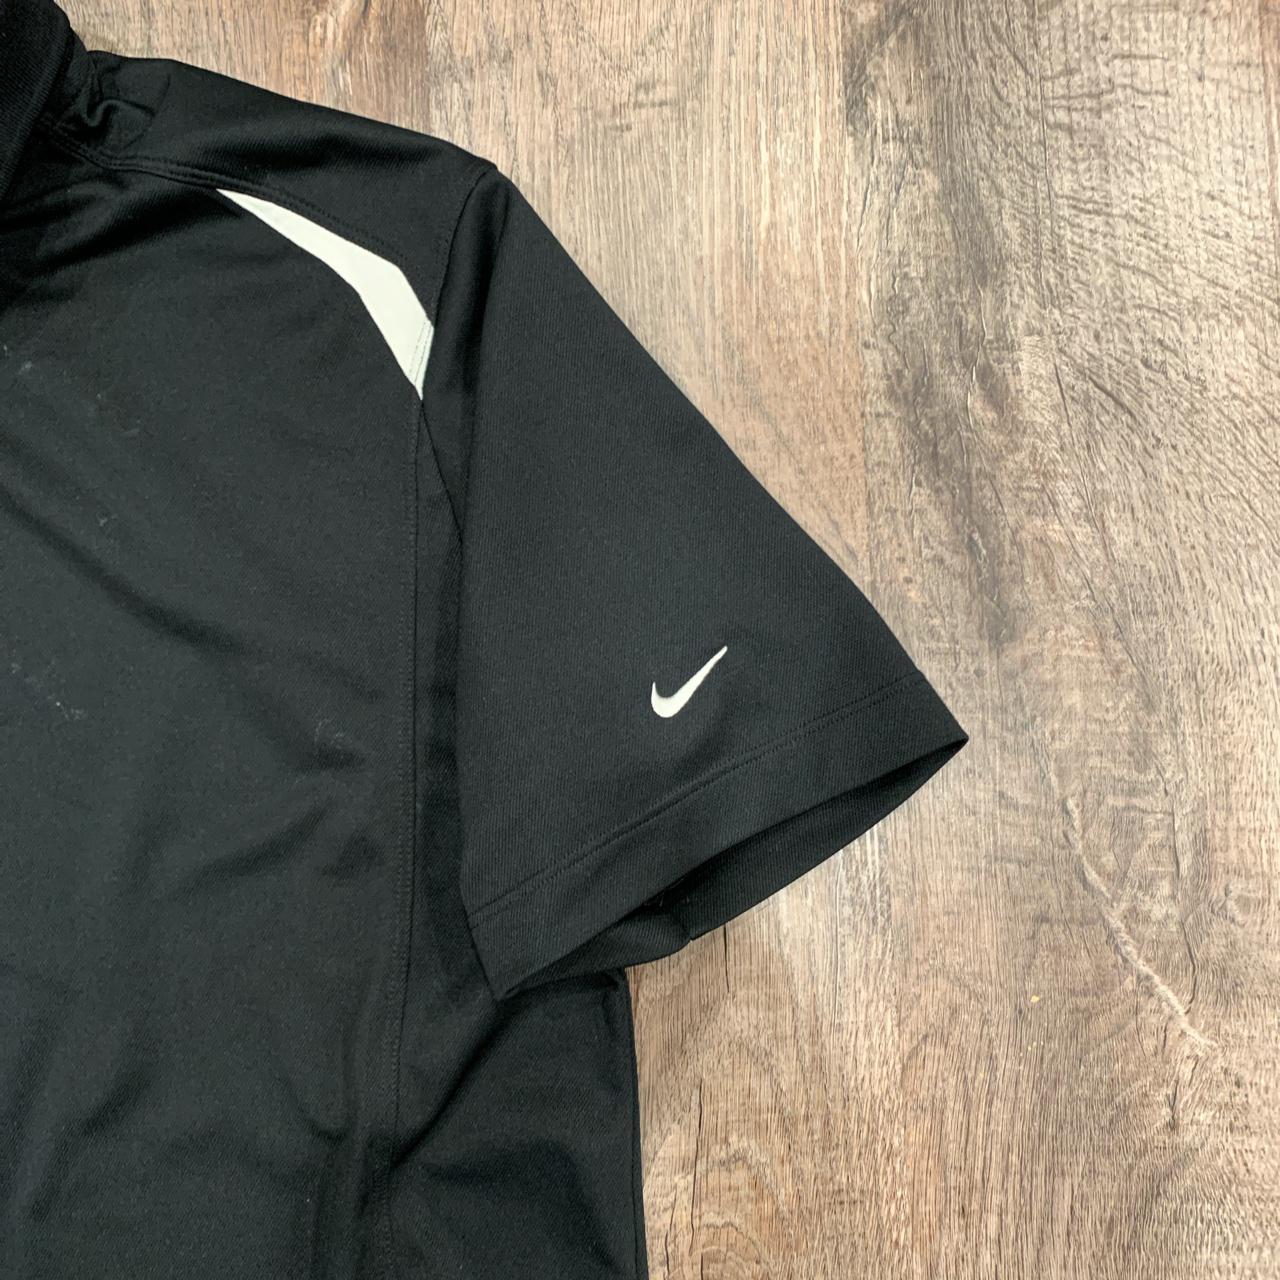 Nike Men's Black and White Polo-shirts (3)